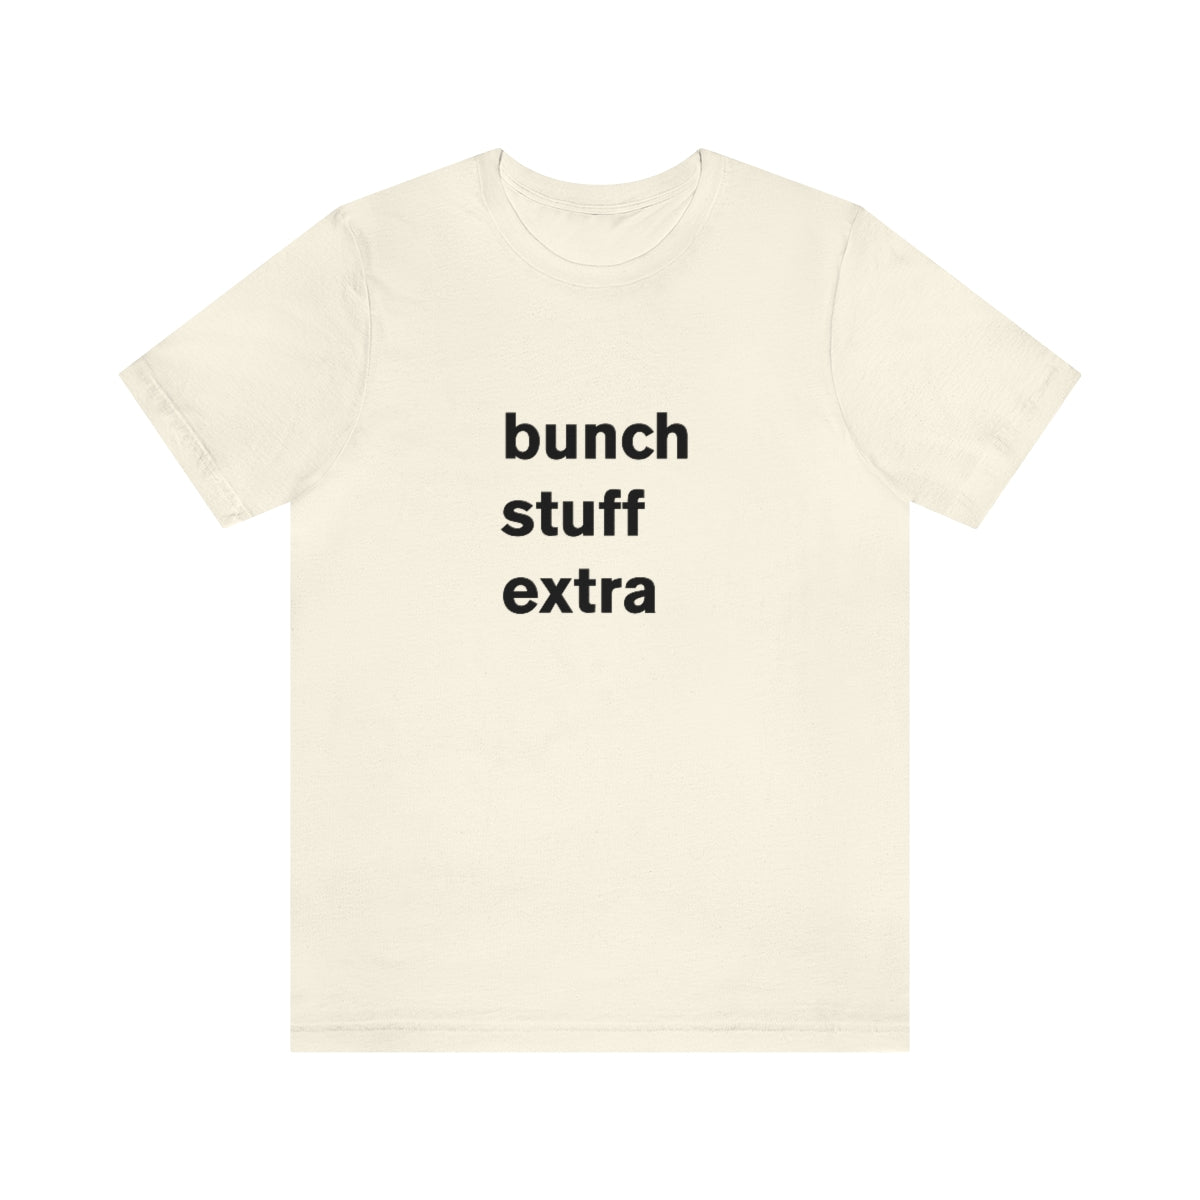 bunch stuff extra - t-shirt